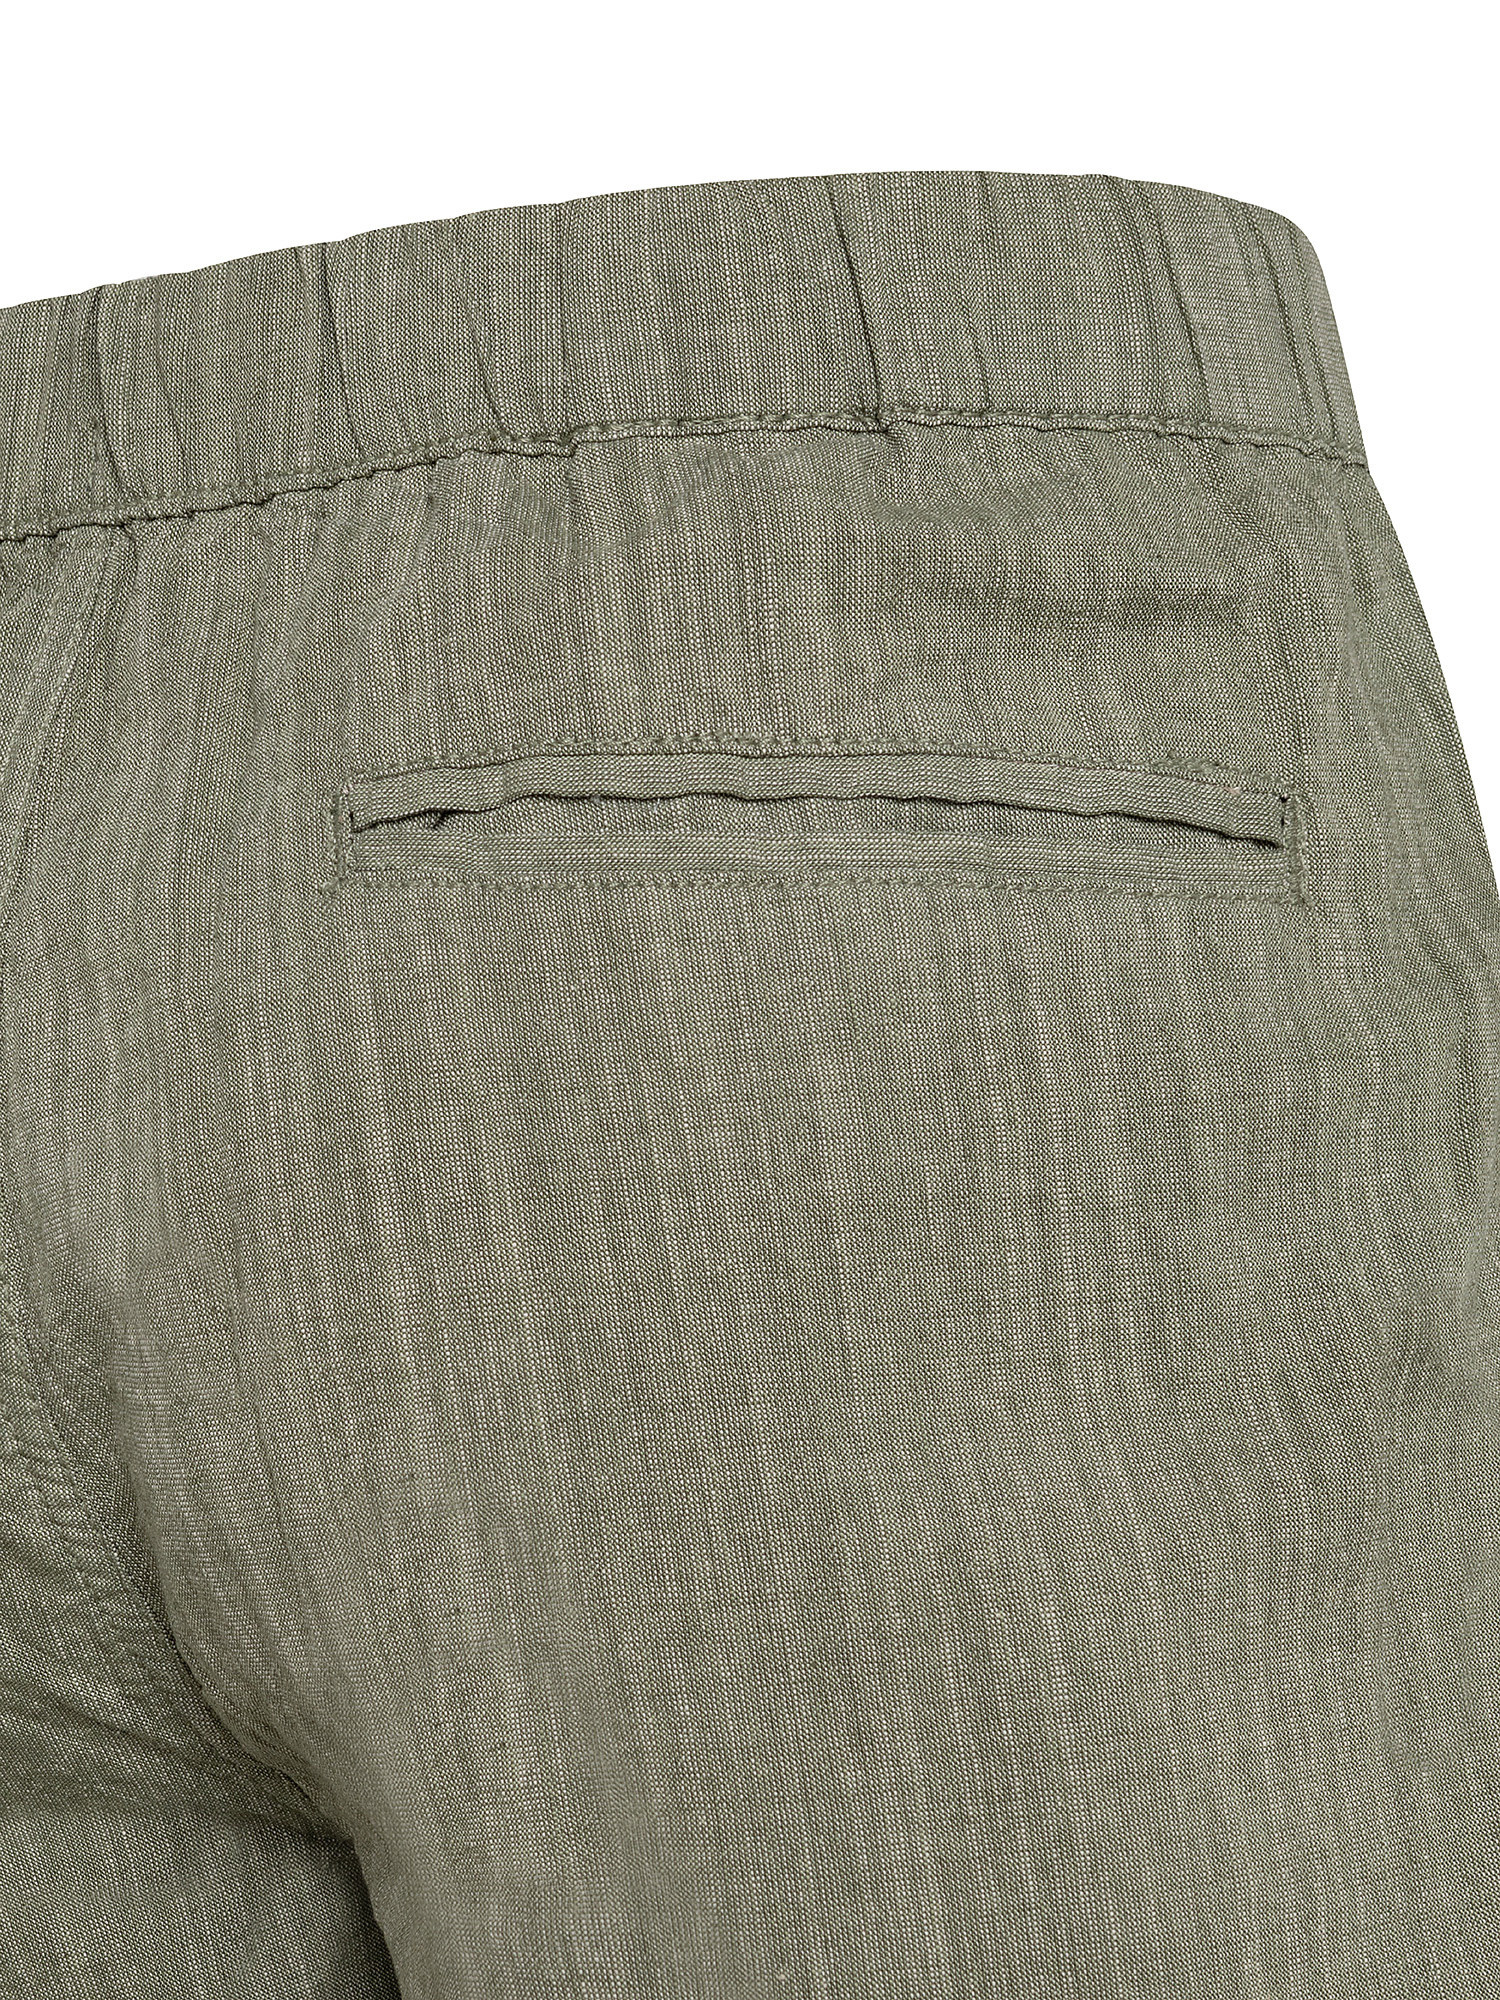 Bermuda shorts with drawstring at the waist, Green, large image number 2